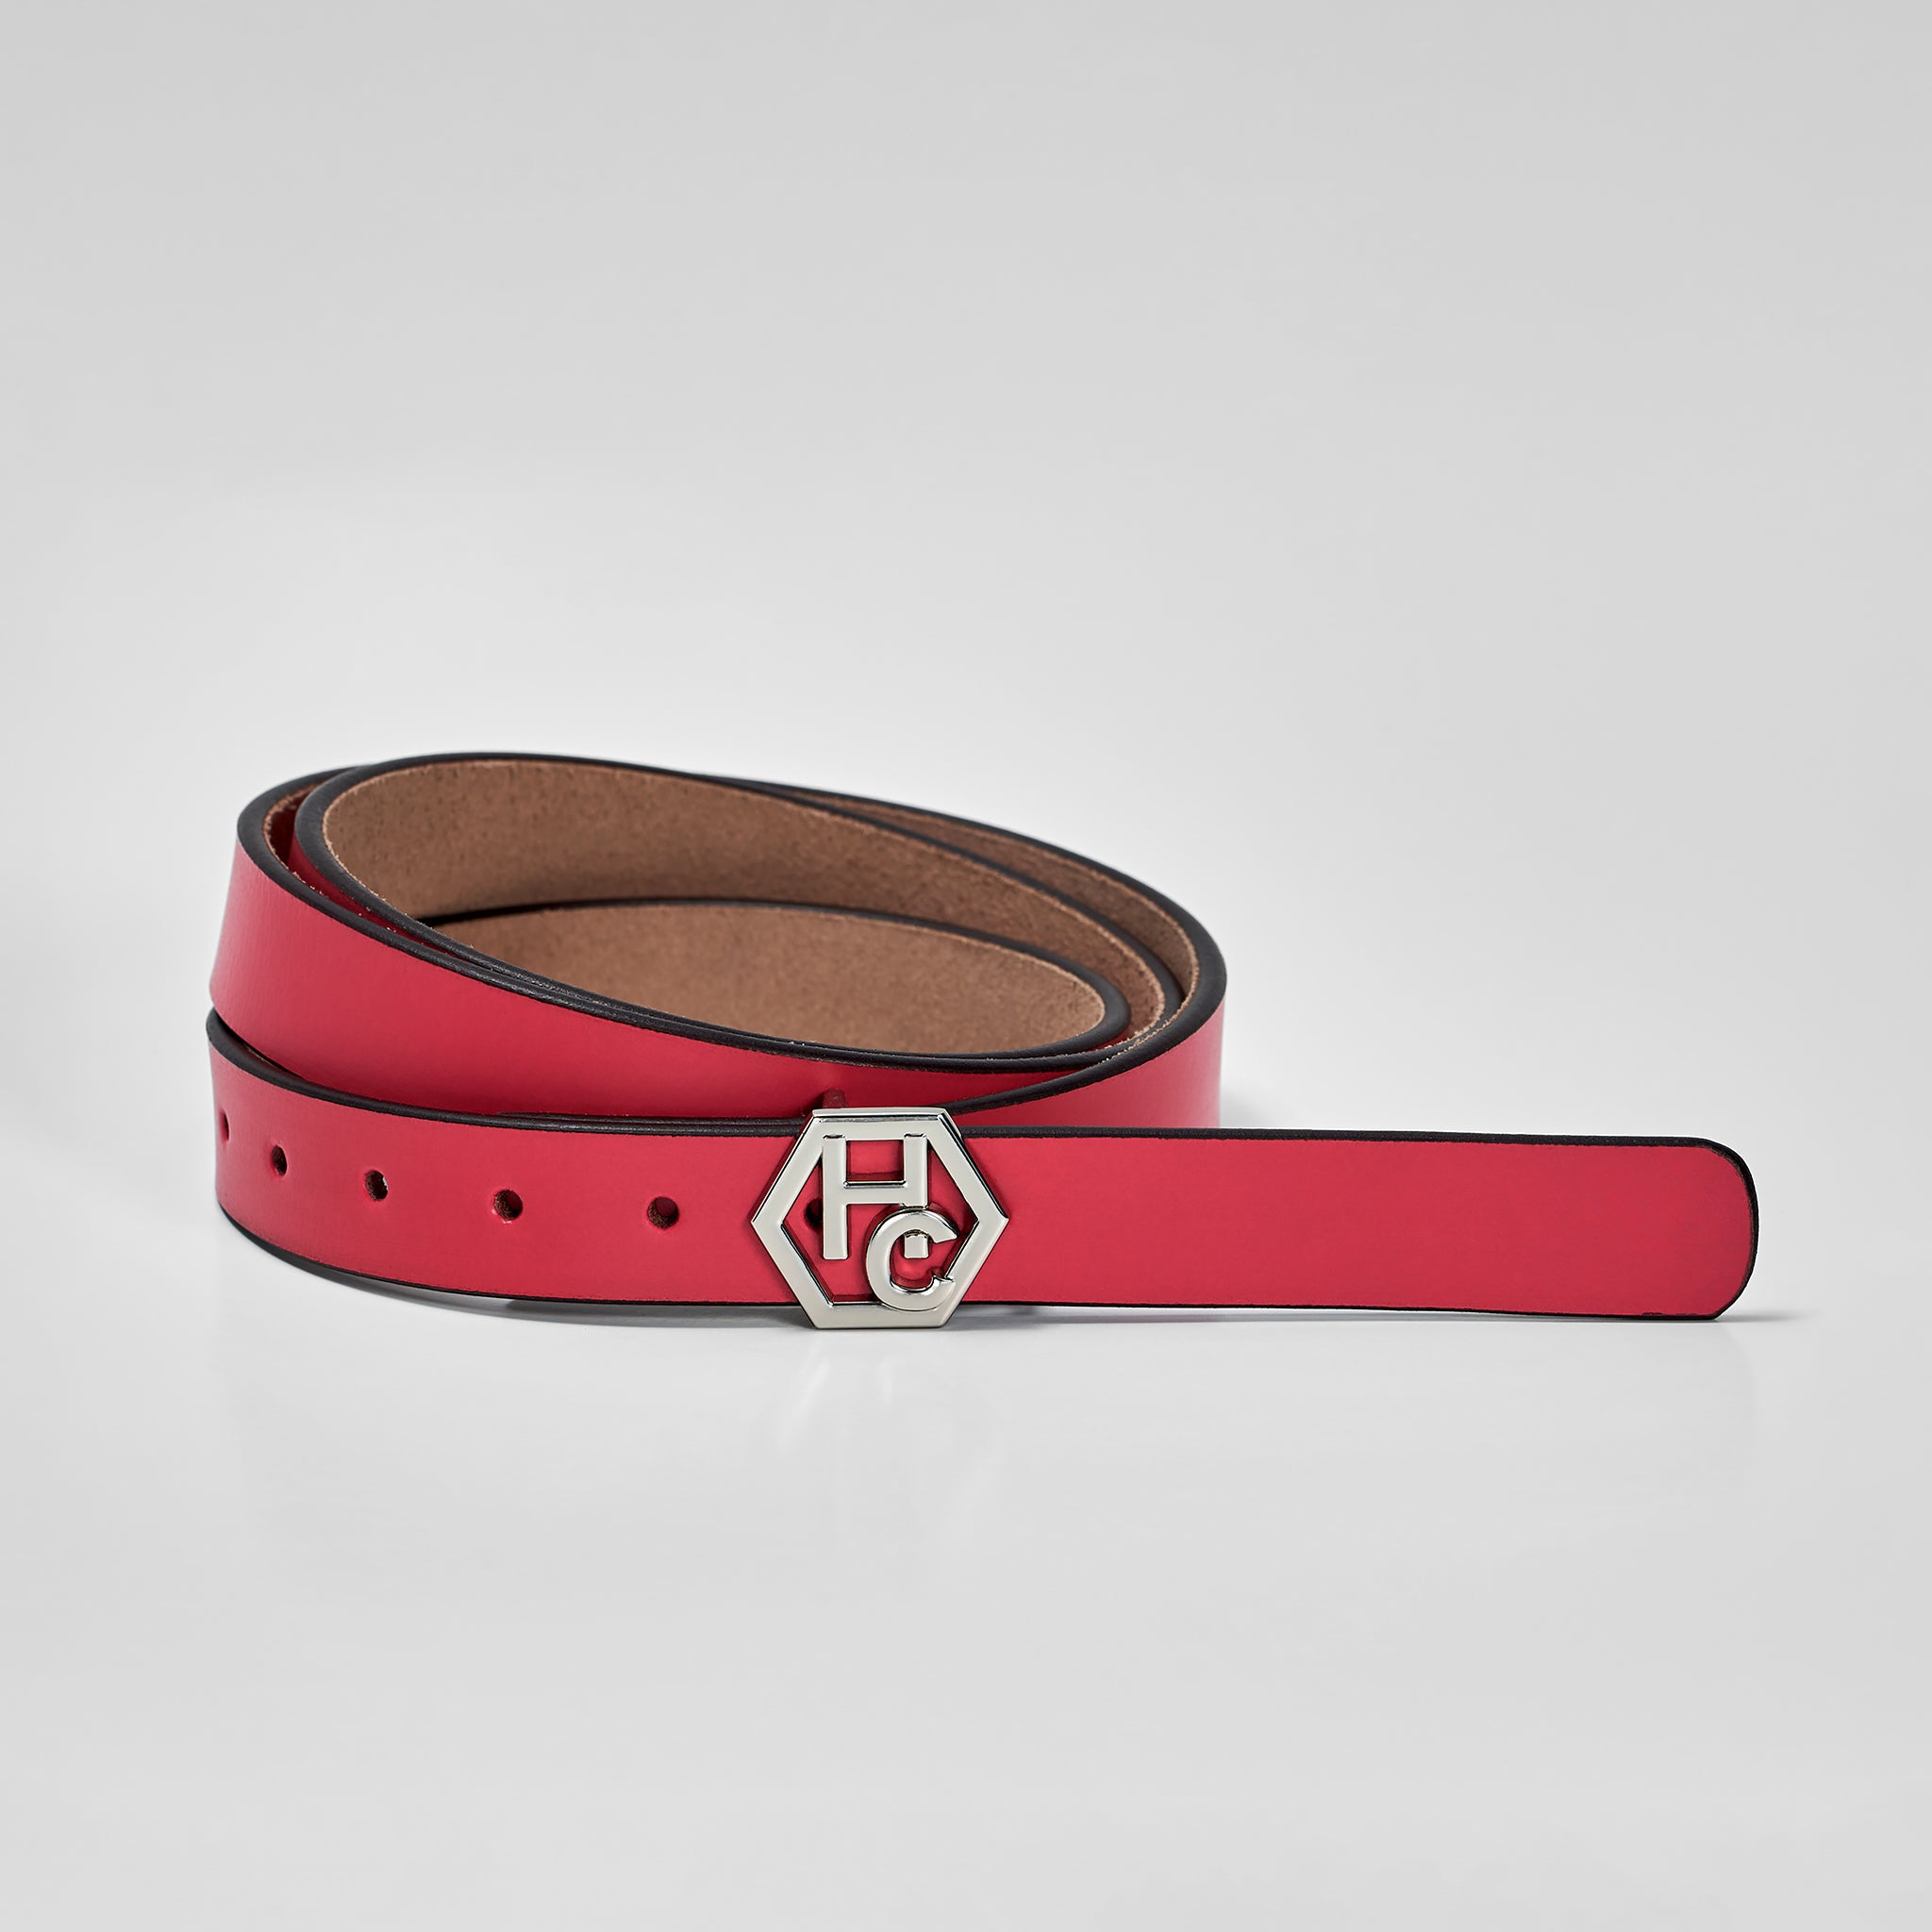 Hedonist Women's Seamless Belt 1" Pink Red